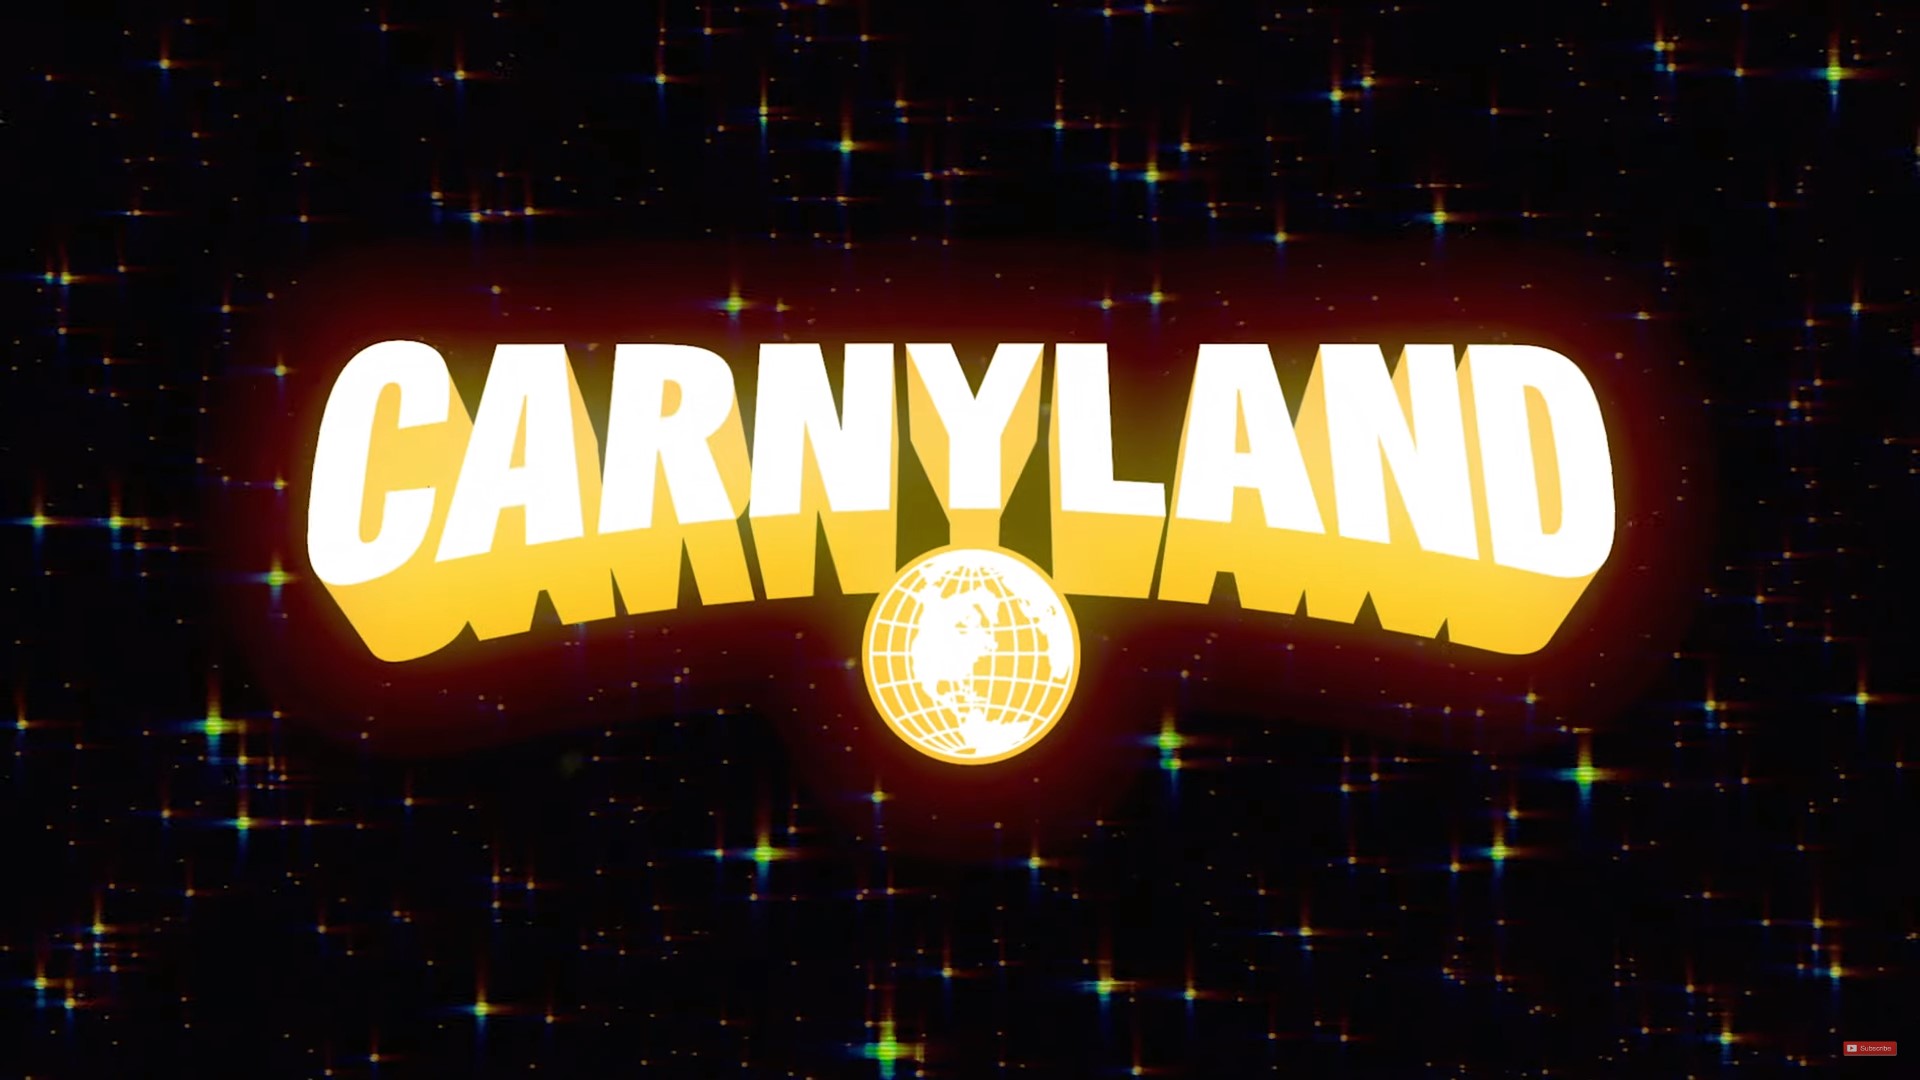 Billy Corgan: “Carnyland aiuterà i fan a capire tanti aspetti del business”